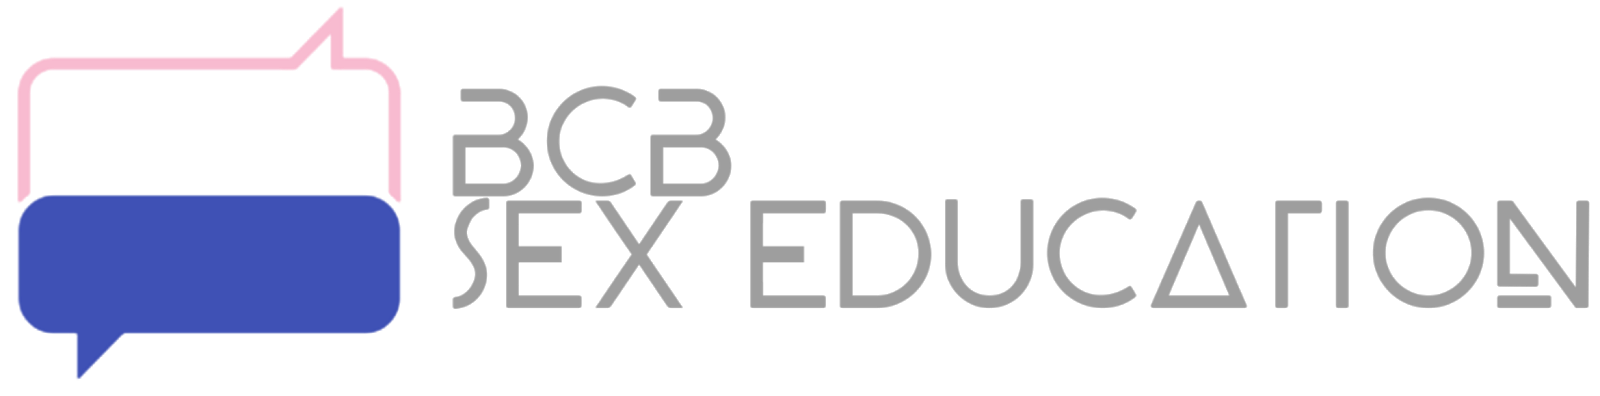 BCB Sex Education